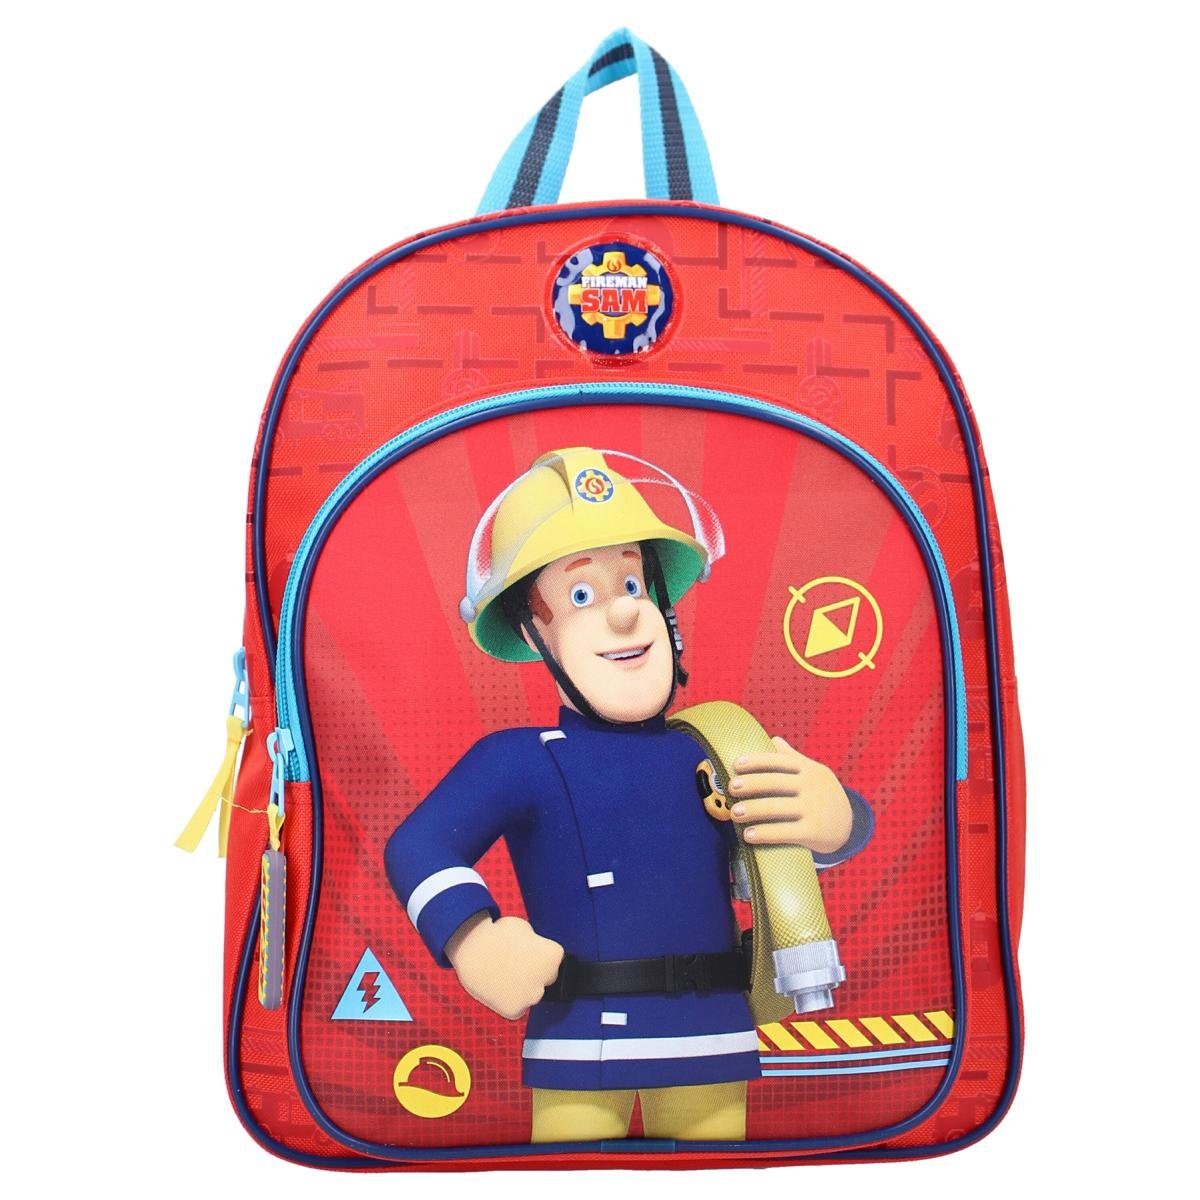 Kinderrucksack 8 Feuerwehrmann Vadobag Liter Freizeitrucksack Kindermotiv Sam,